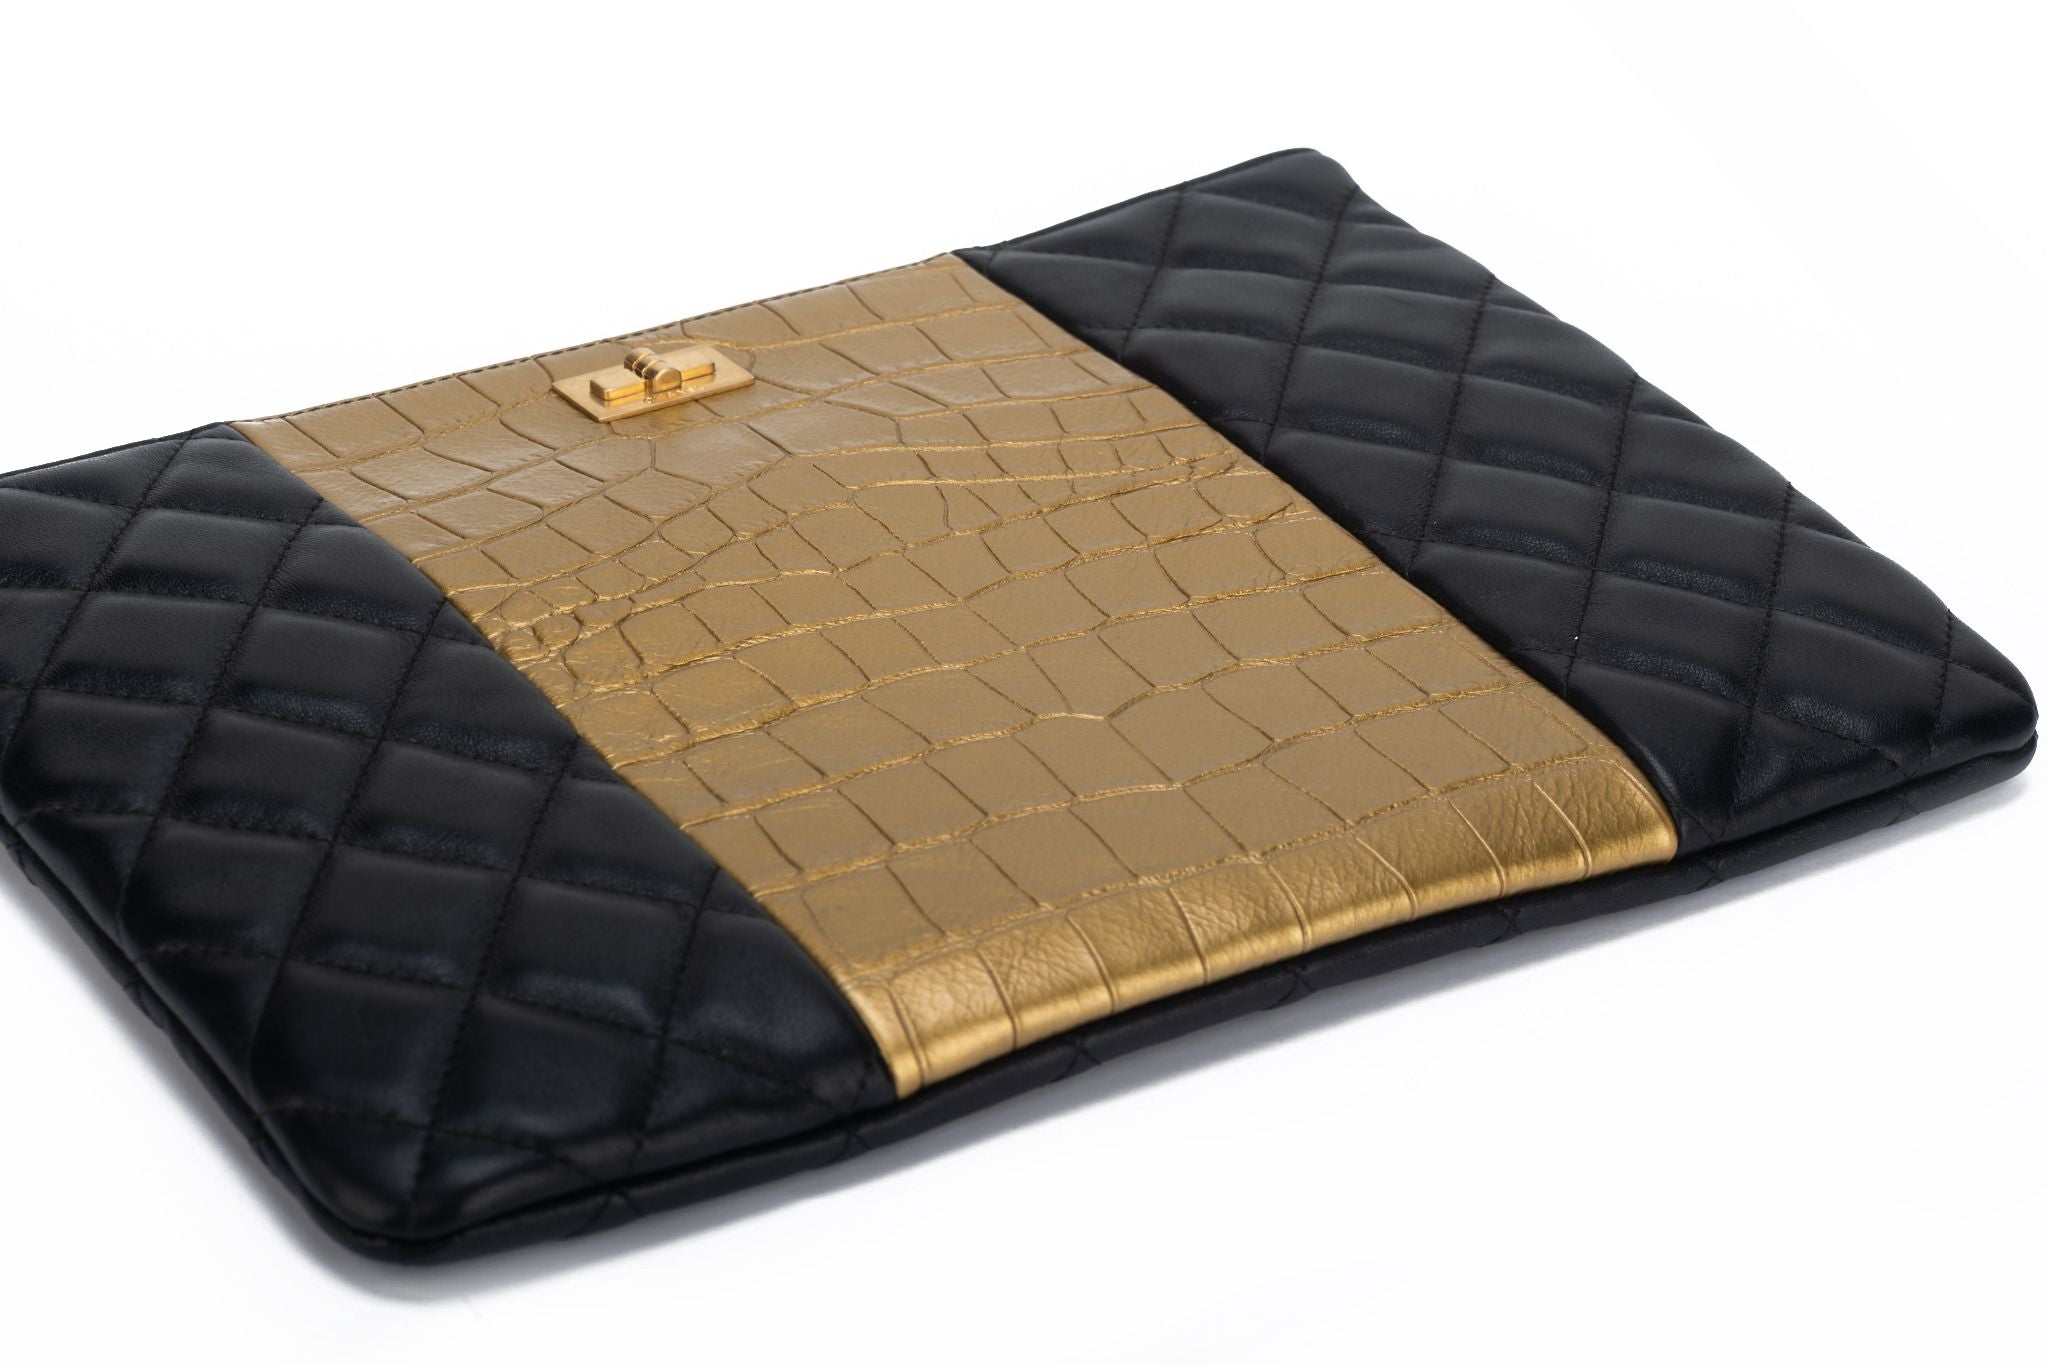 Chanel BNIB Black & Gold Croc Clutch - Vintage Lux